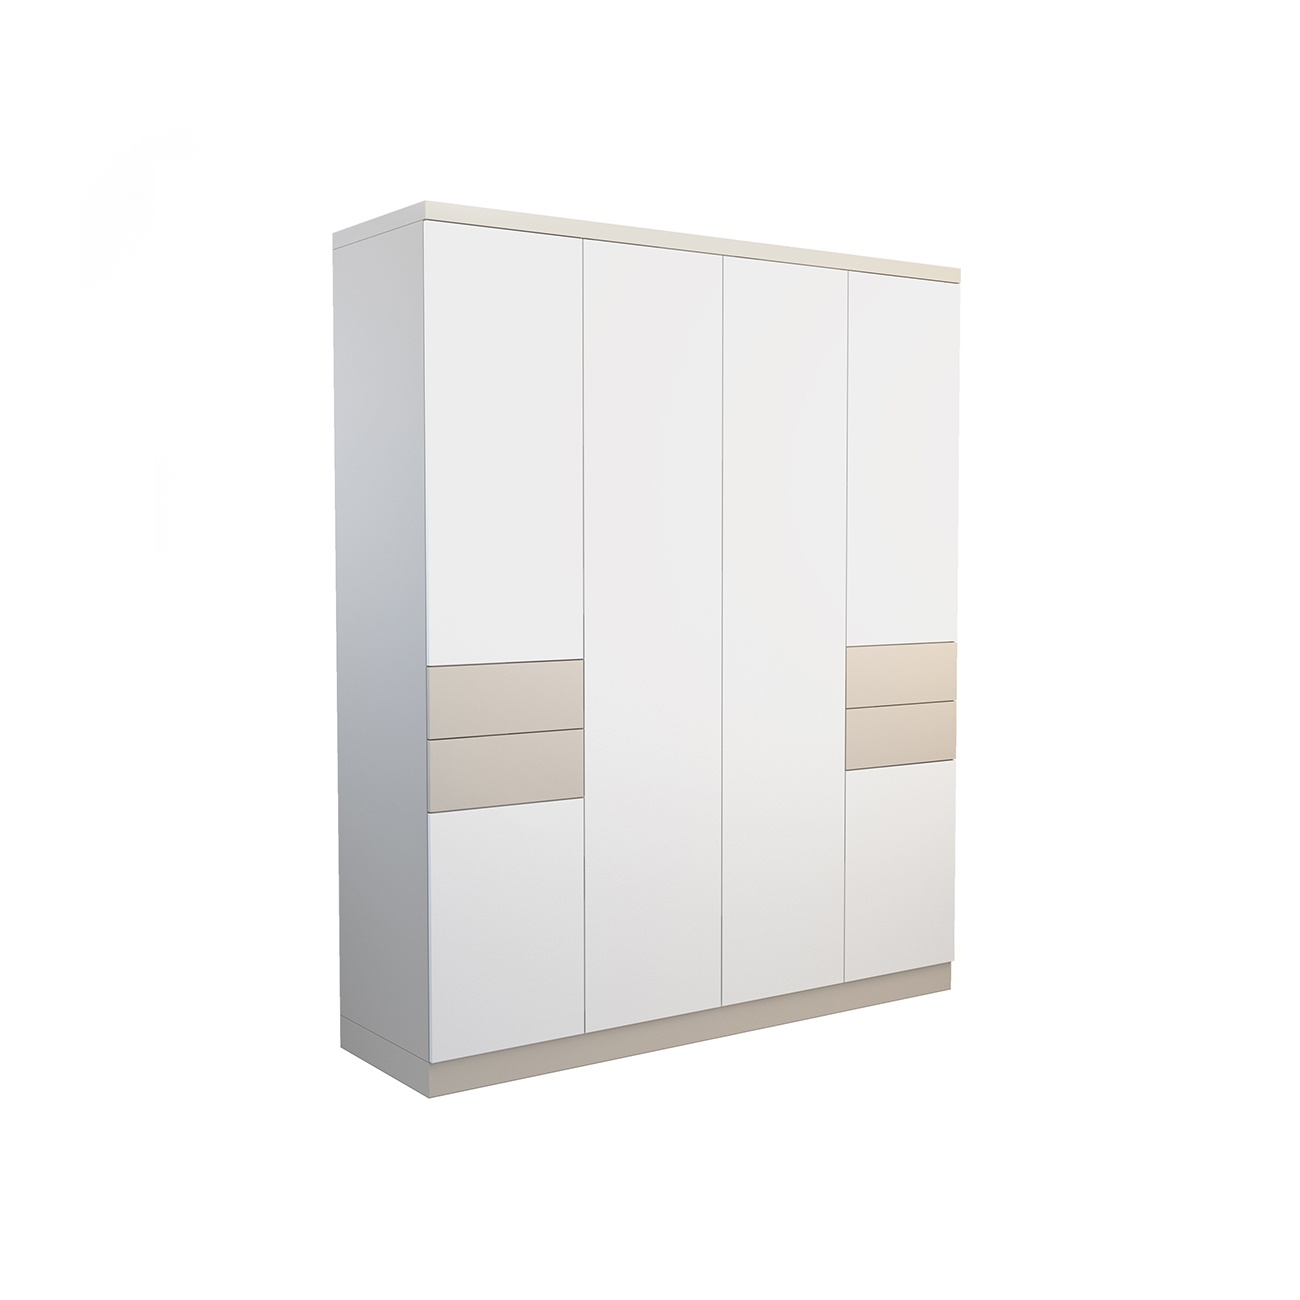 Шкаф galata soft olhause серый 200x240x60 см.